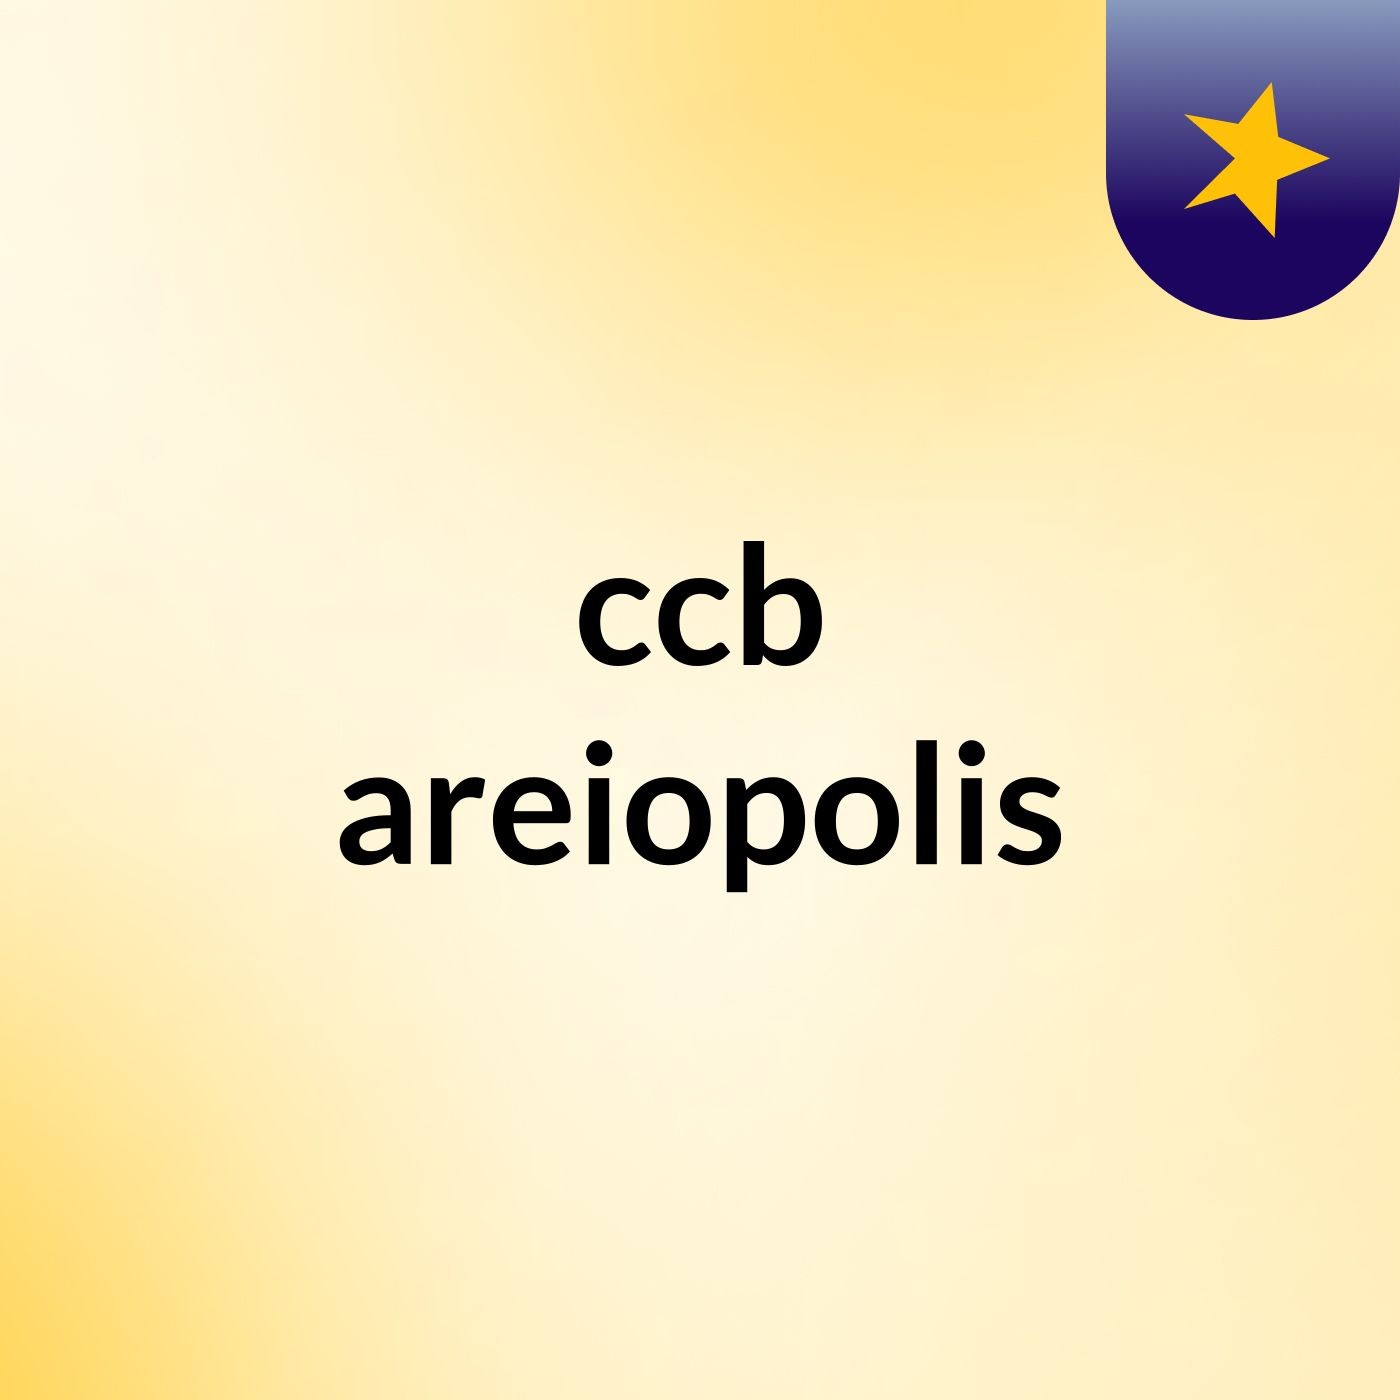 ccb areiopolis